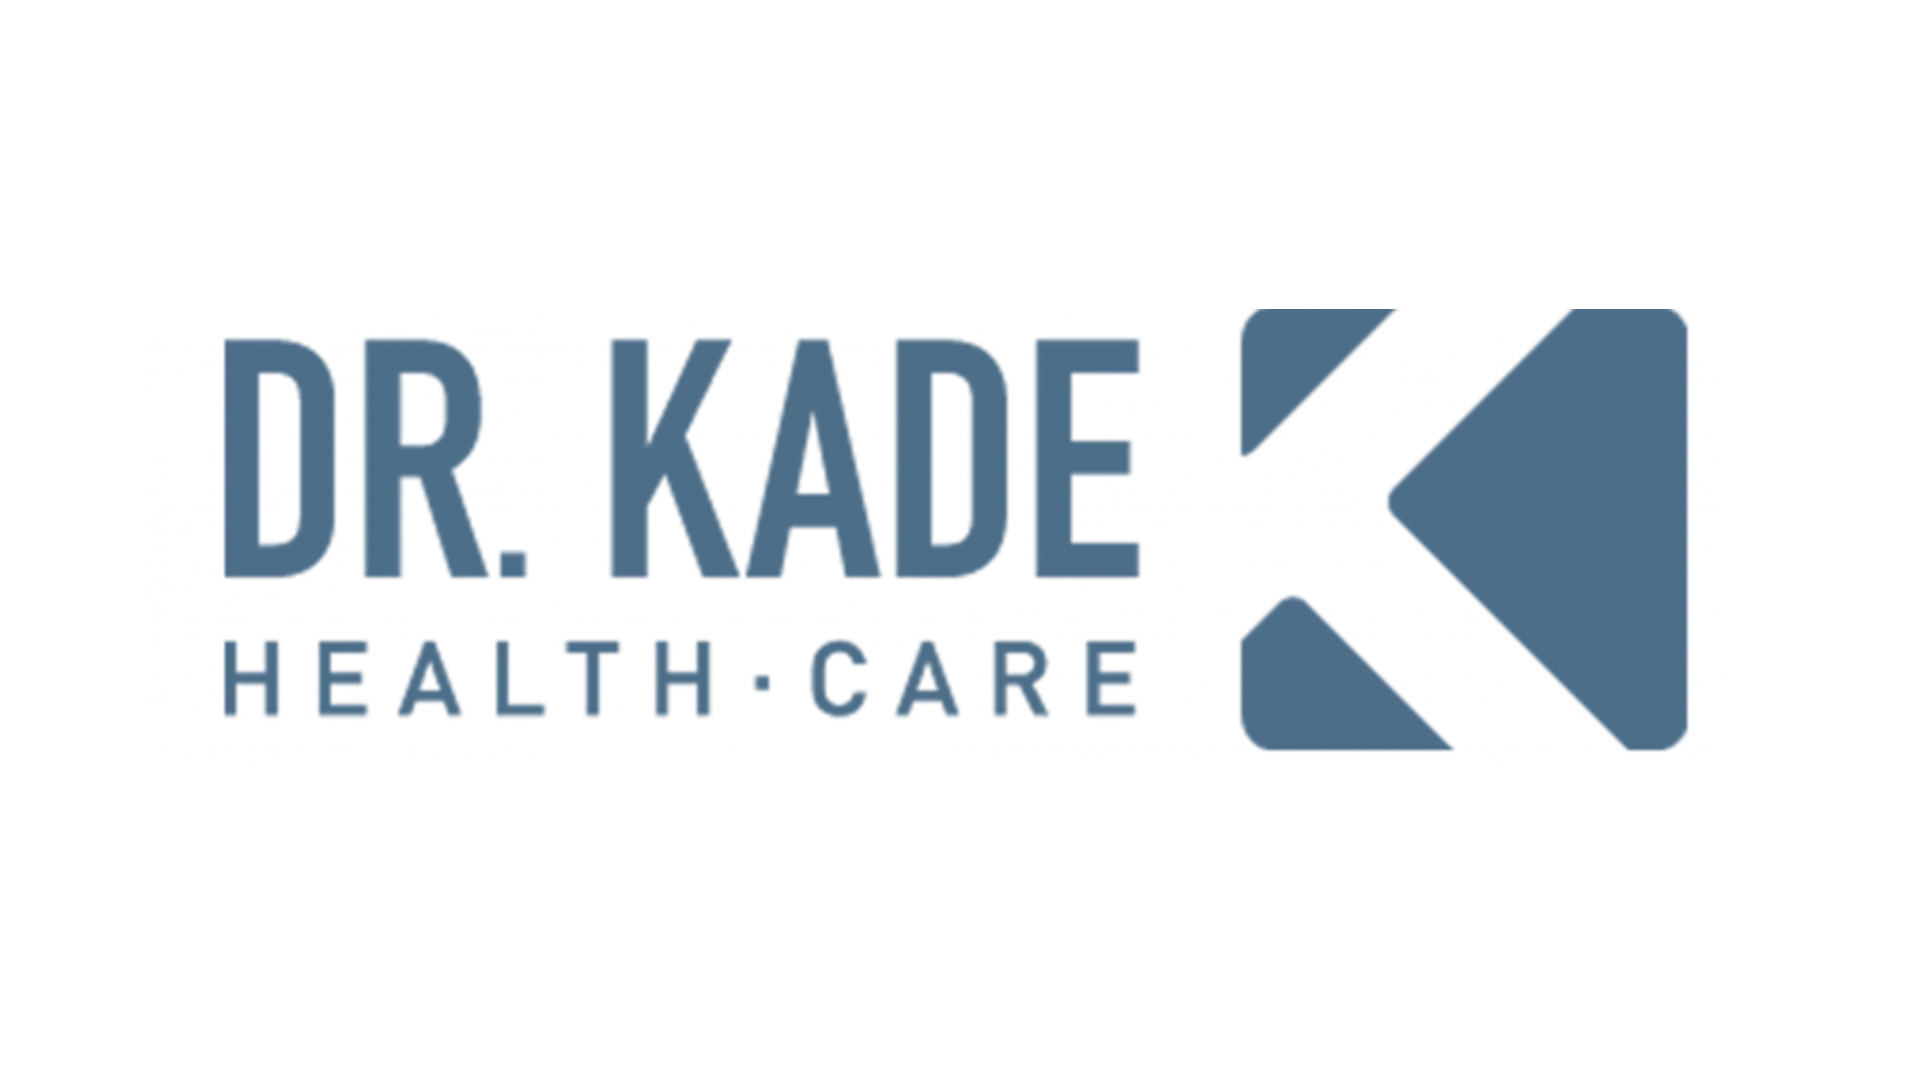 Neues Pharma Packaging Projekt - Wir begrüßen Dr. Kade als Kunden